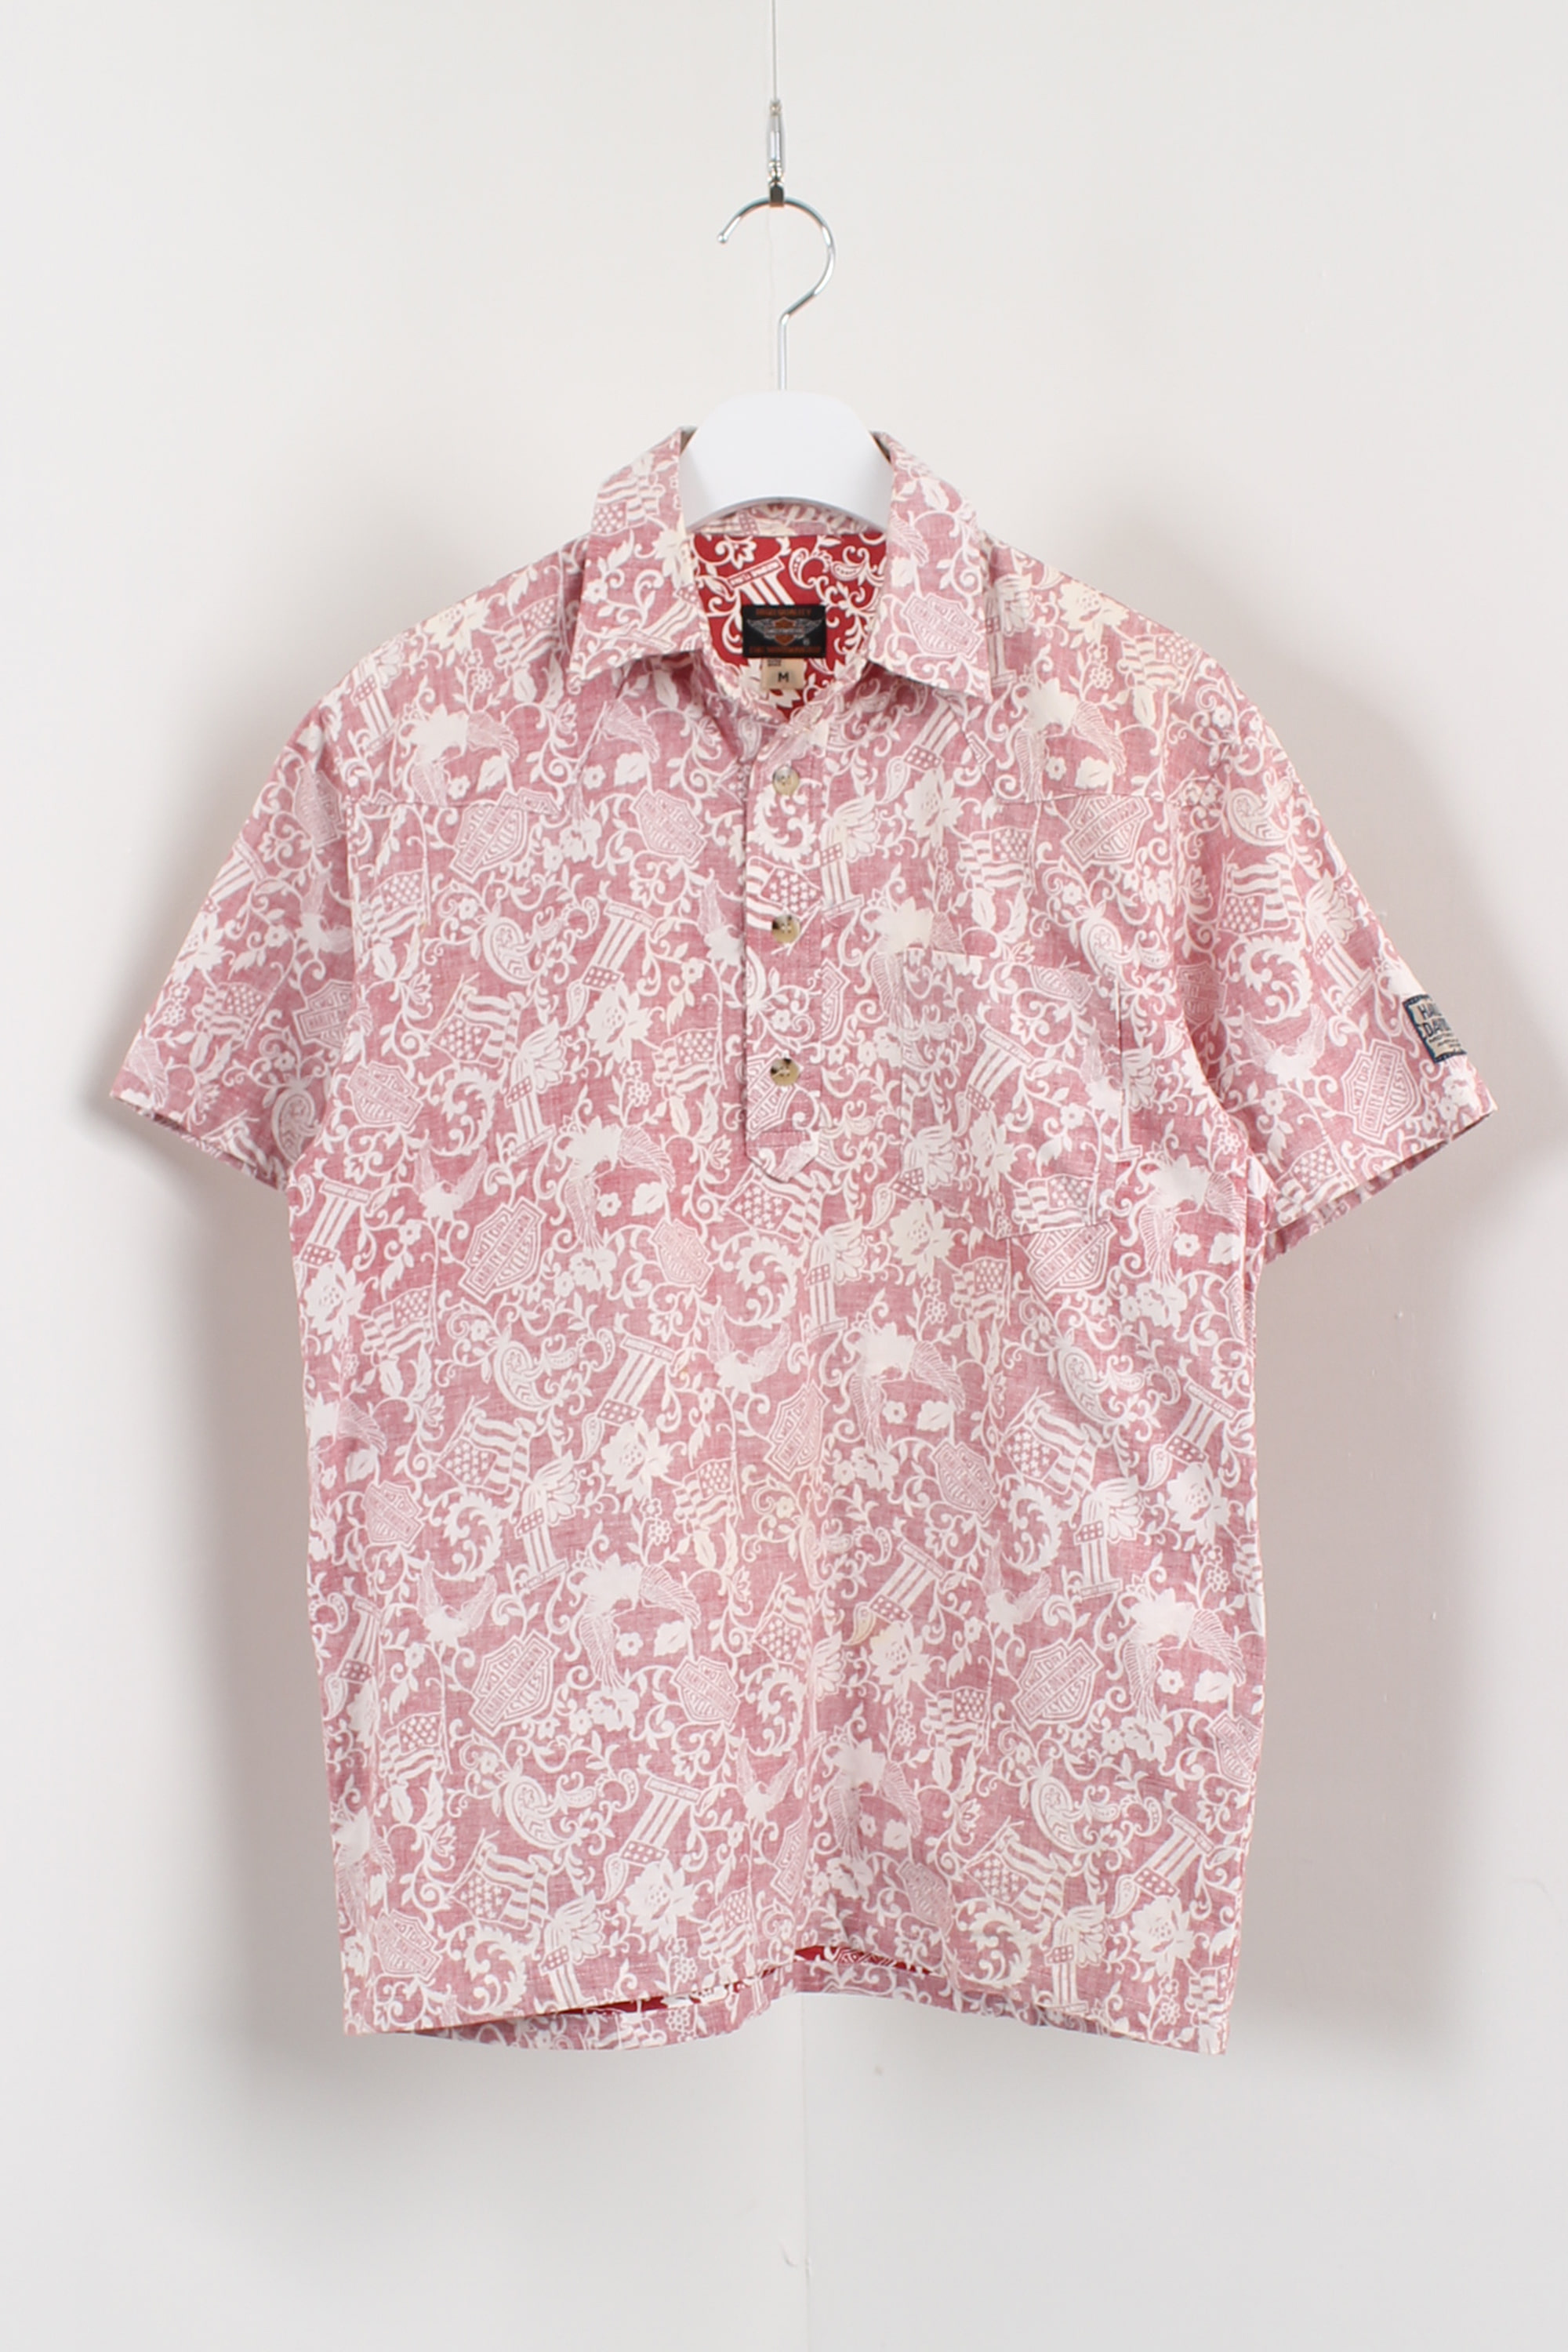 harley davidson aloha shirt